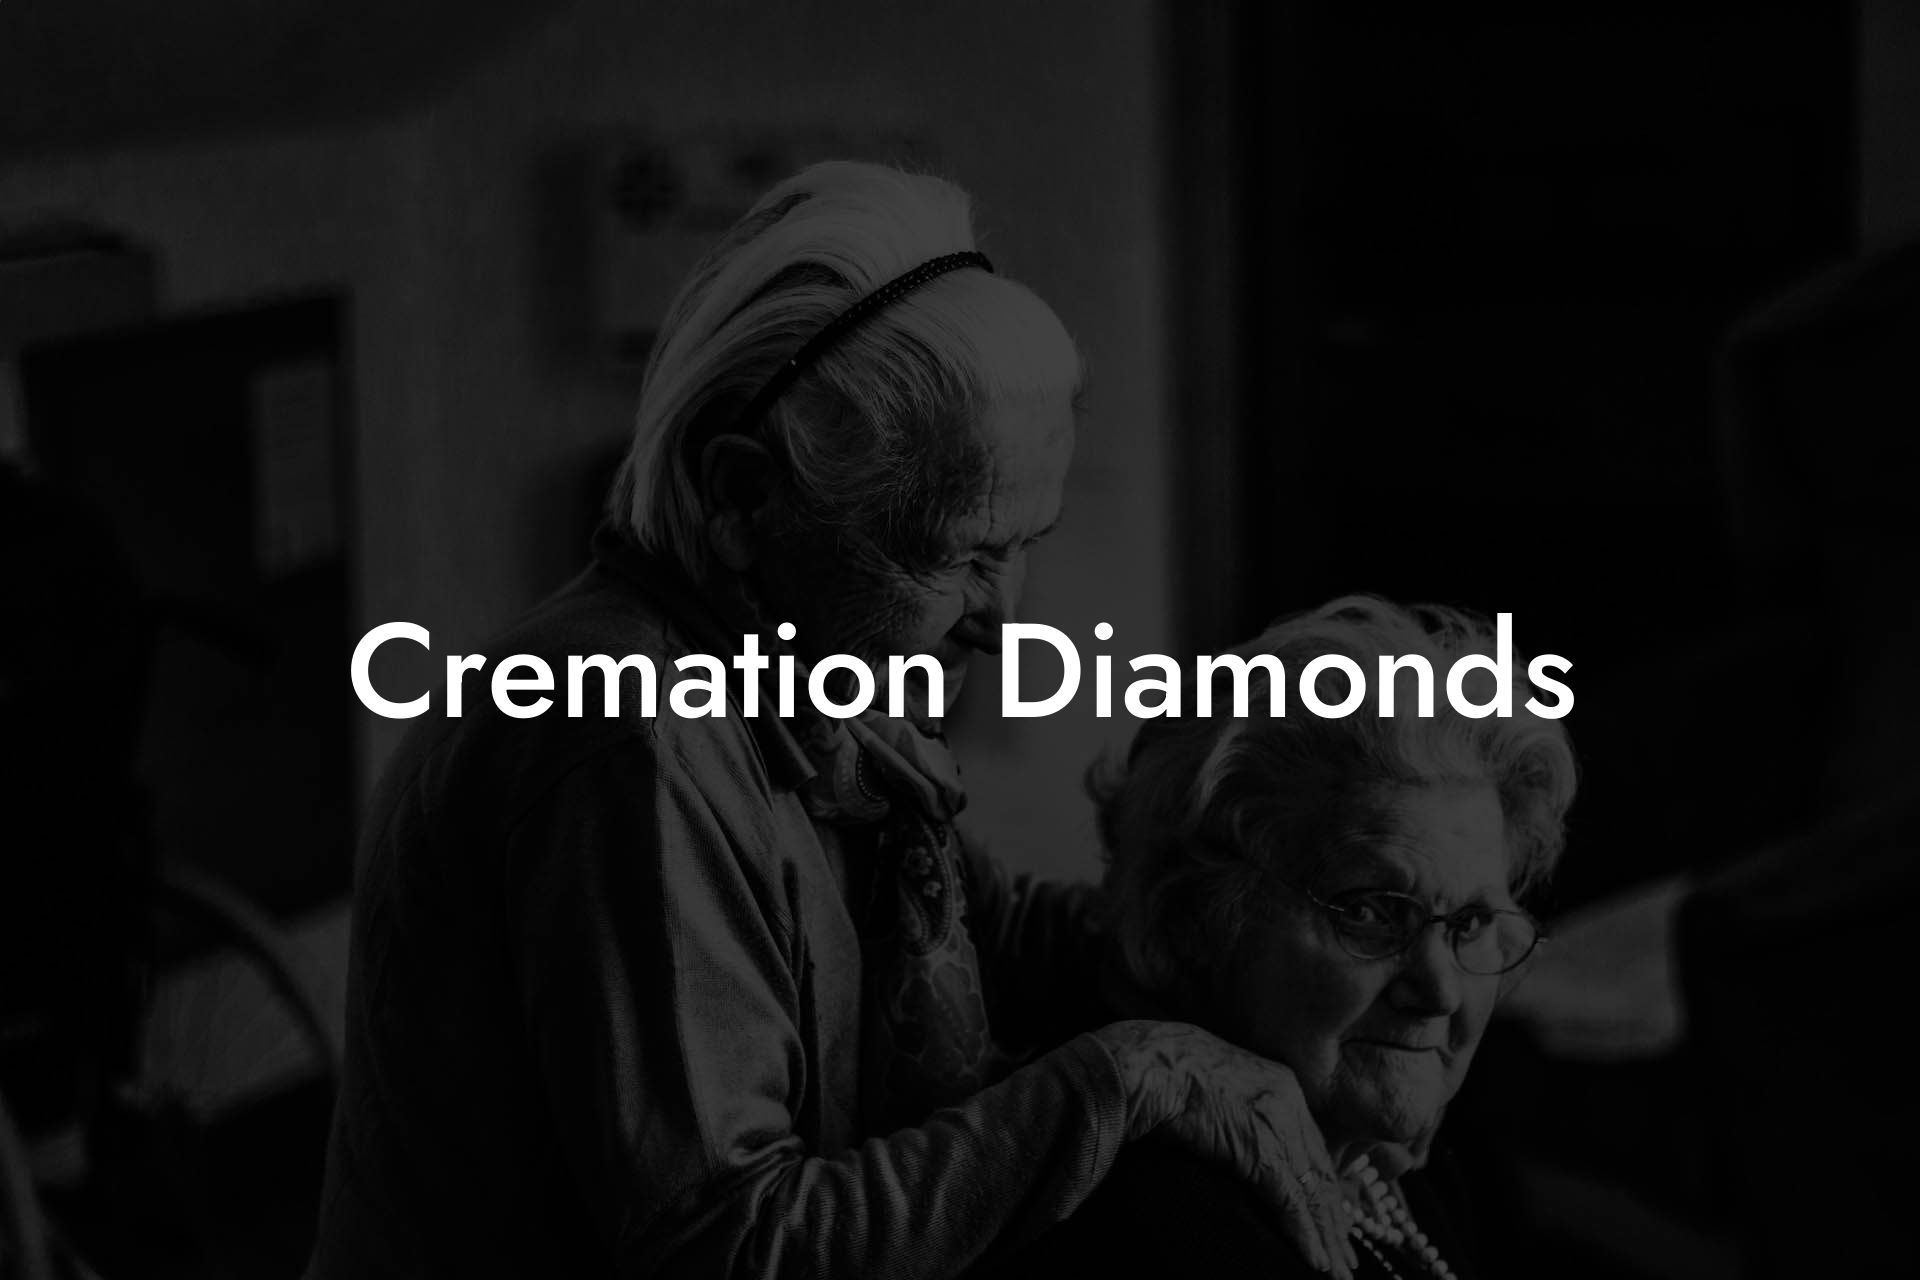 Cremation Diamonds